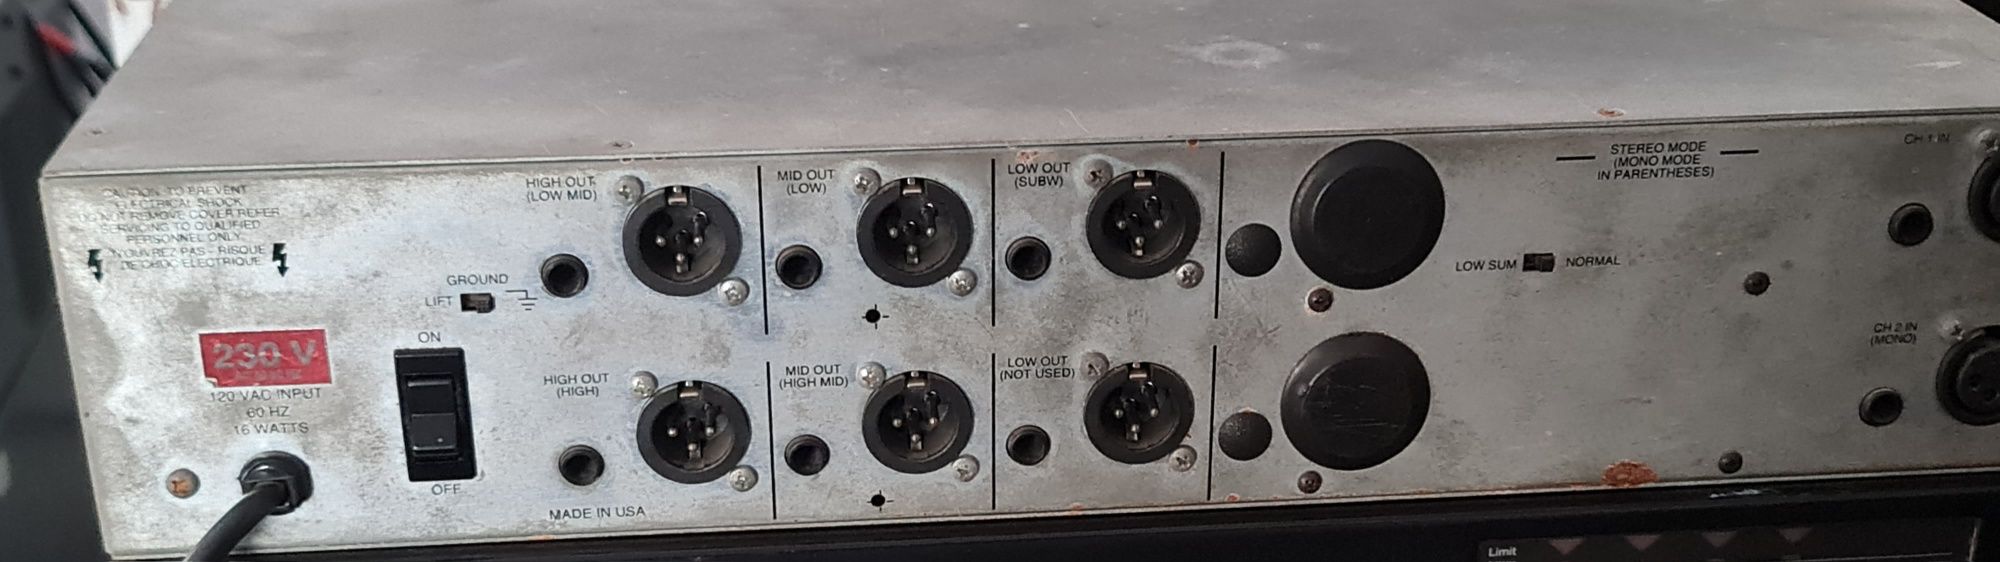 Crossover Furman X-424 (trei căi stereo) Nu DBX, Nu Rane, Nu Dynacord